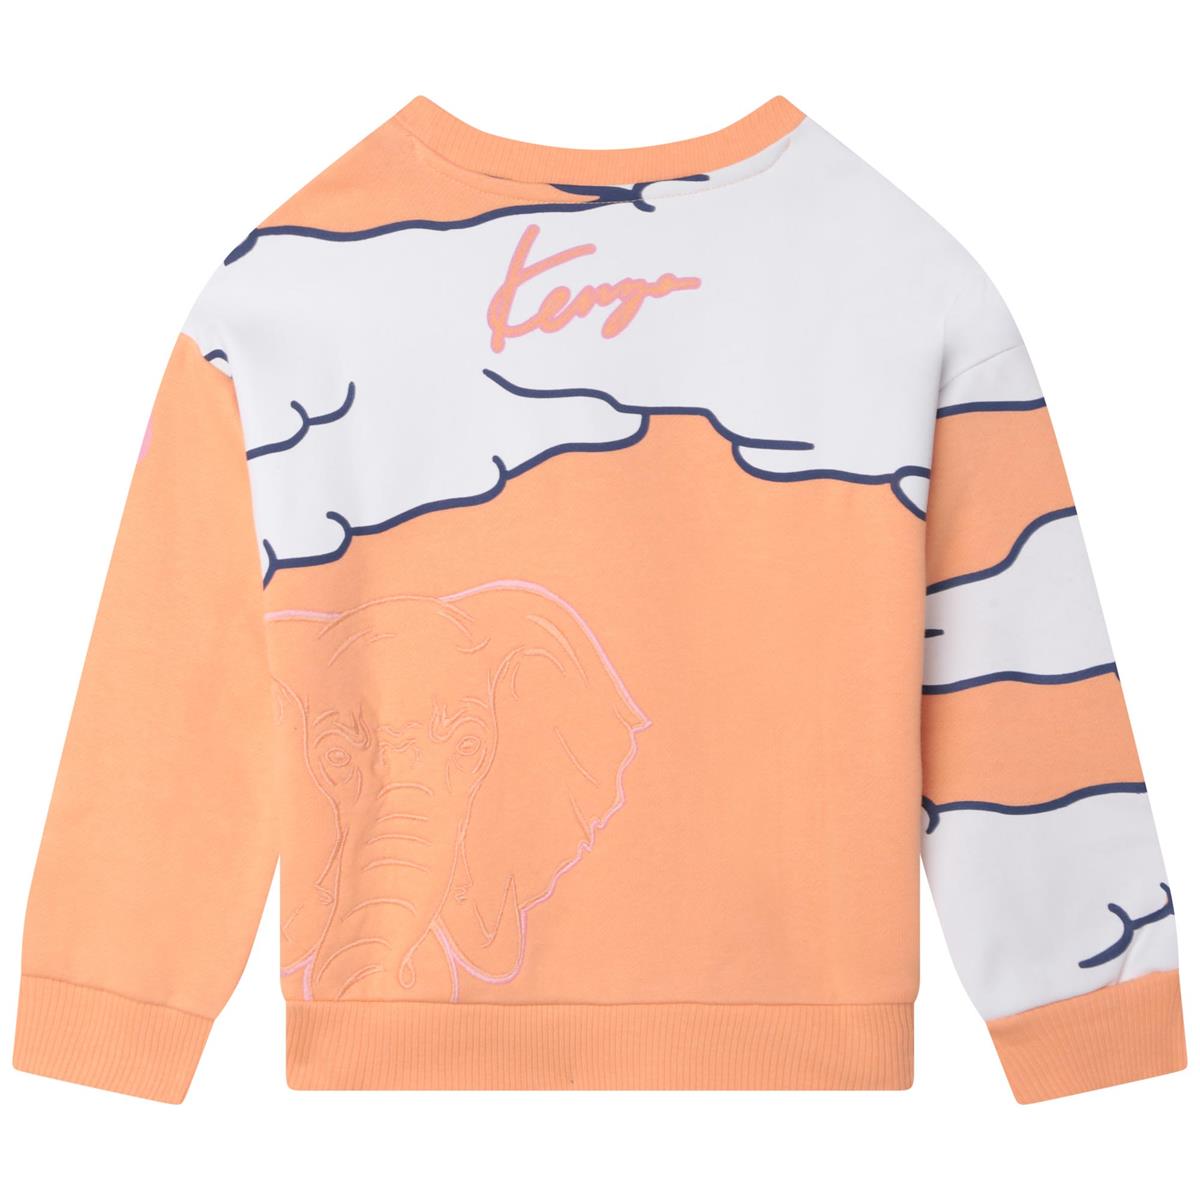 Boys & Girls Orange Sweatshirt